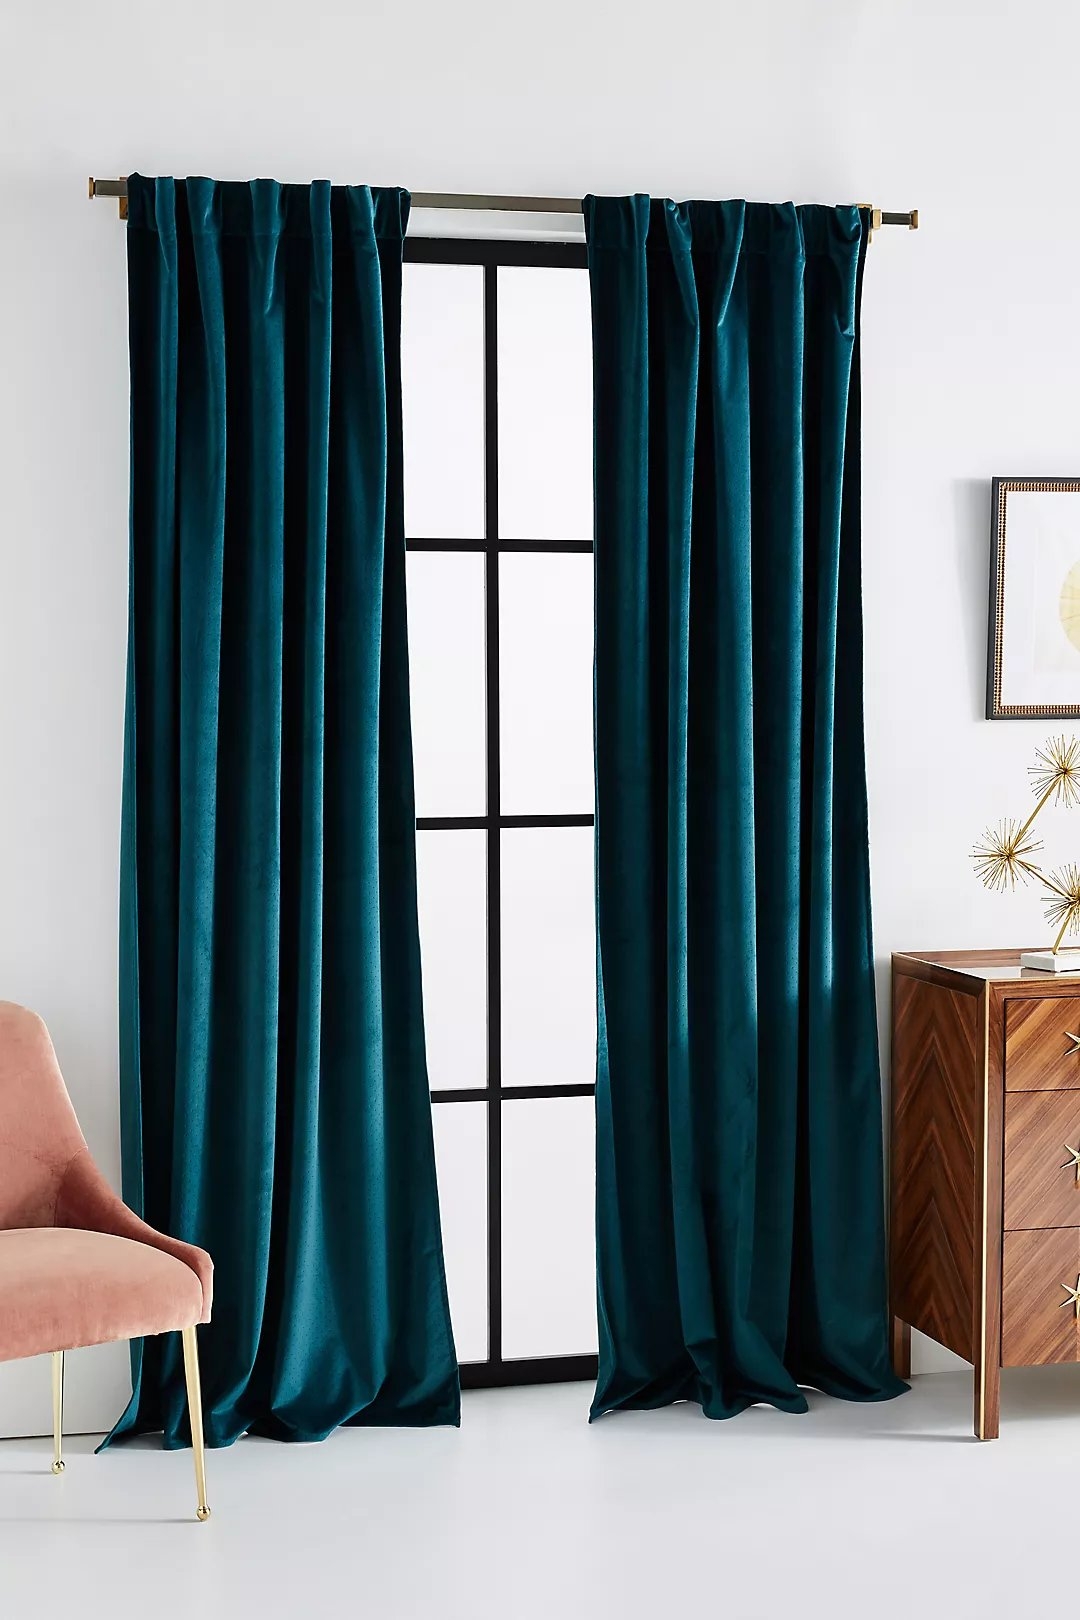 Velvet Louise Curtain, Teal, 50" x 84" - Image 0